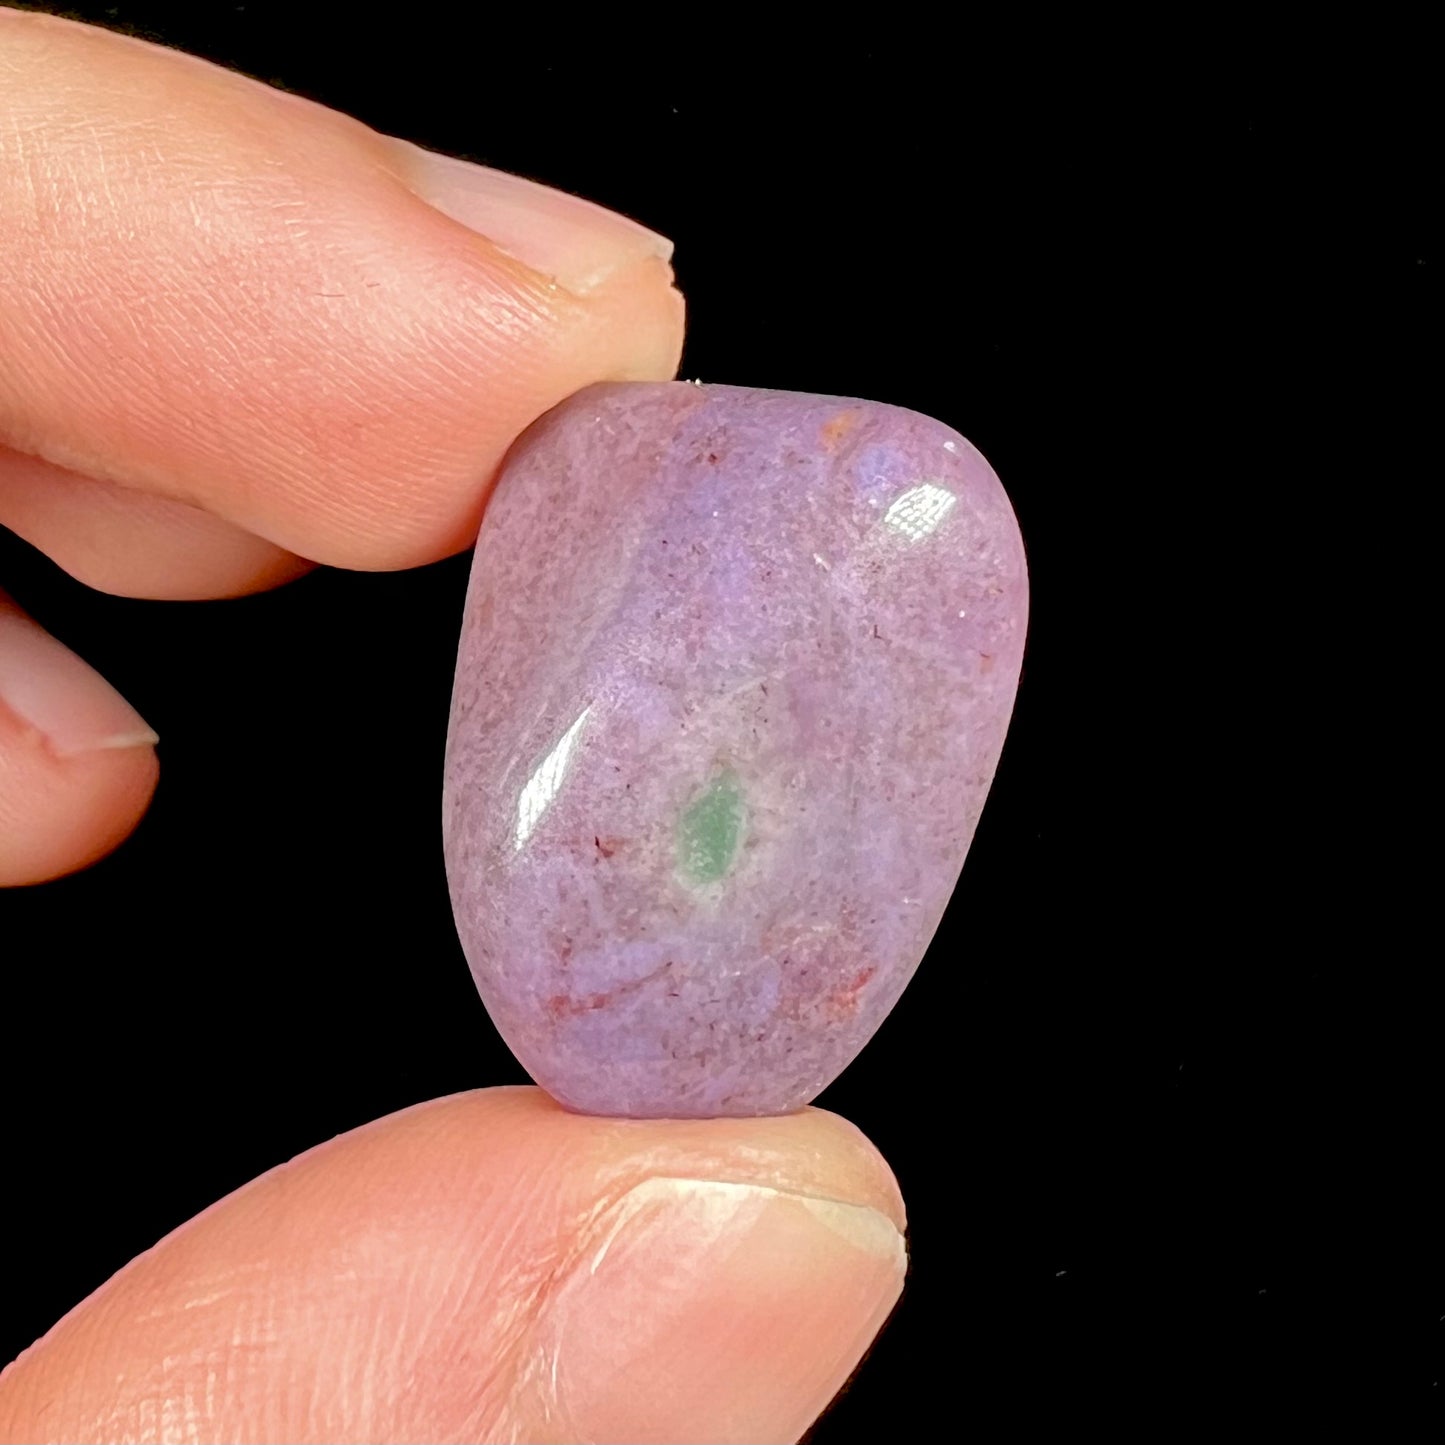 A tumbled purple turkiyenite jade stone from Borsa, Turkey.  The stone has a green jadeite inclusion.